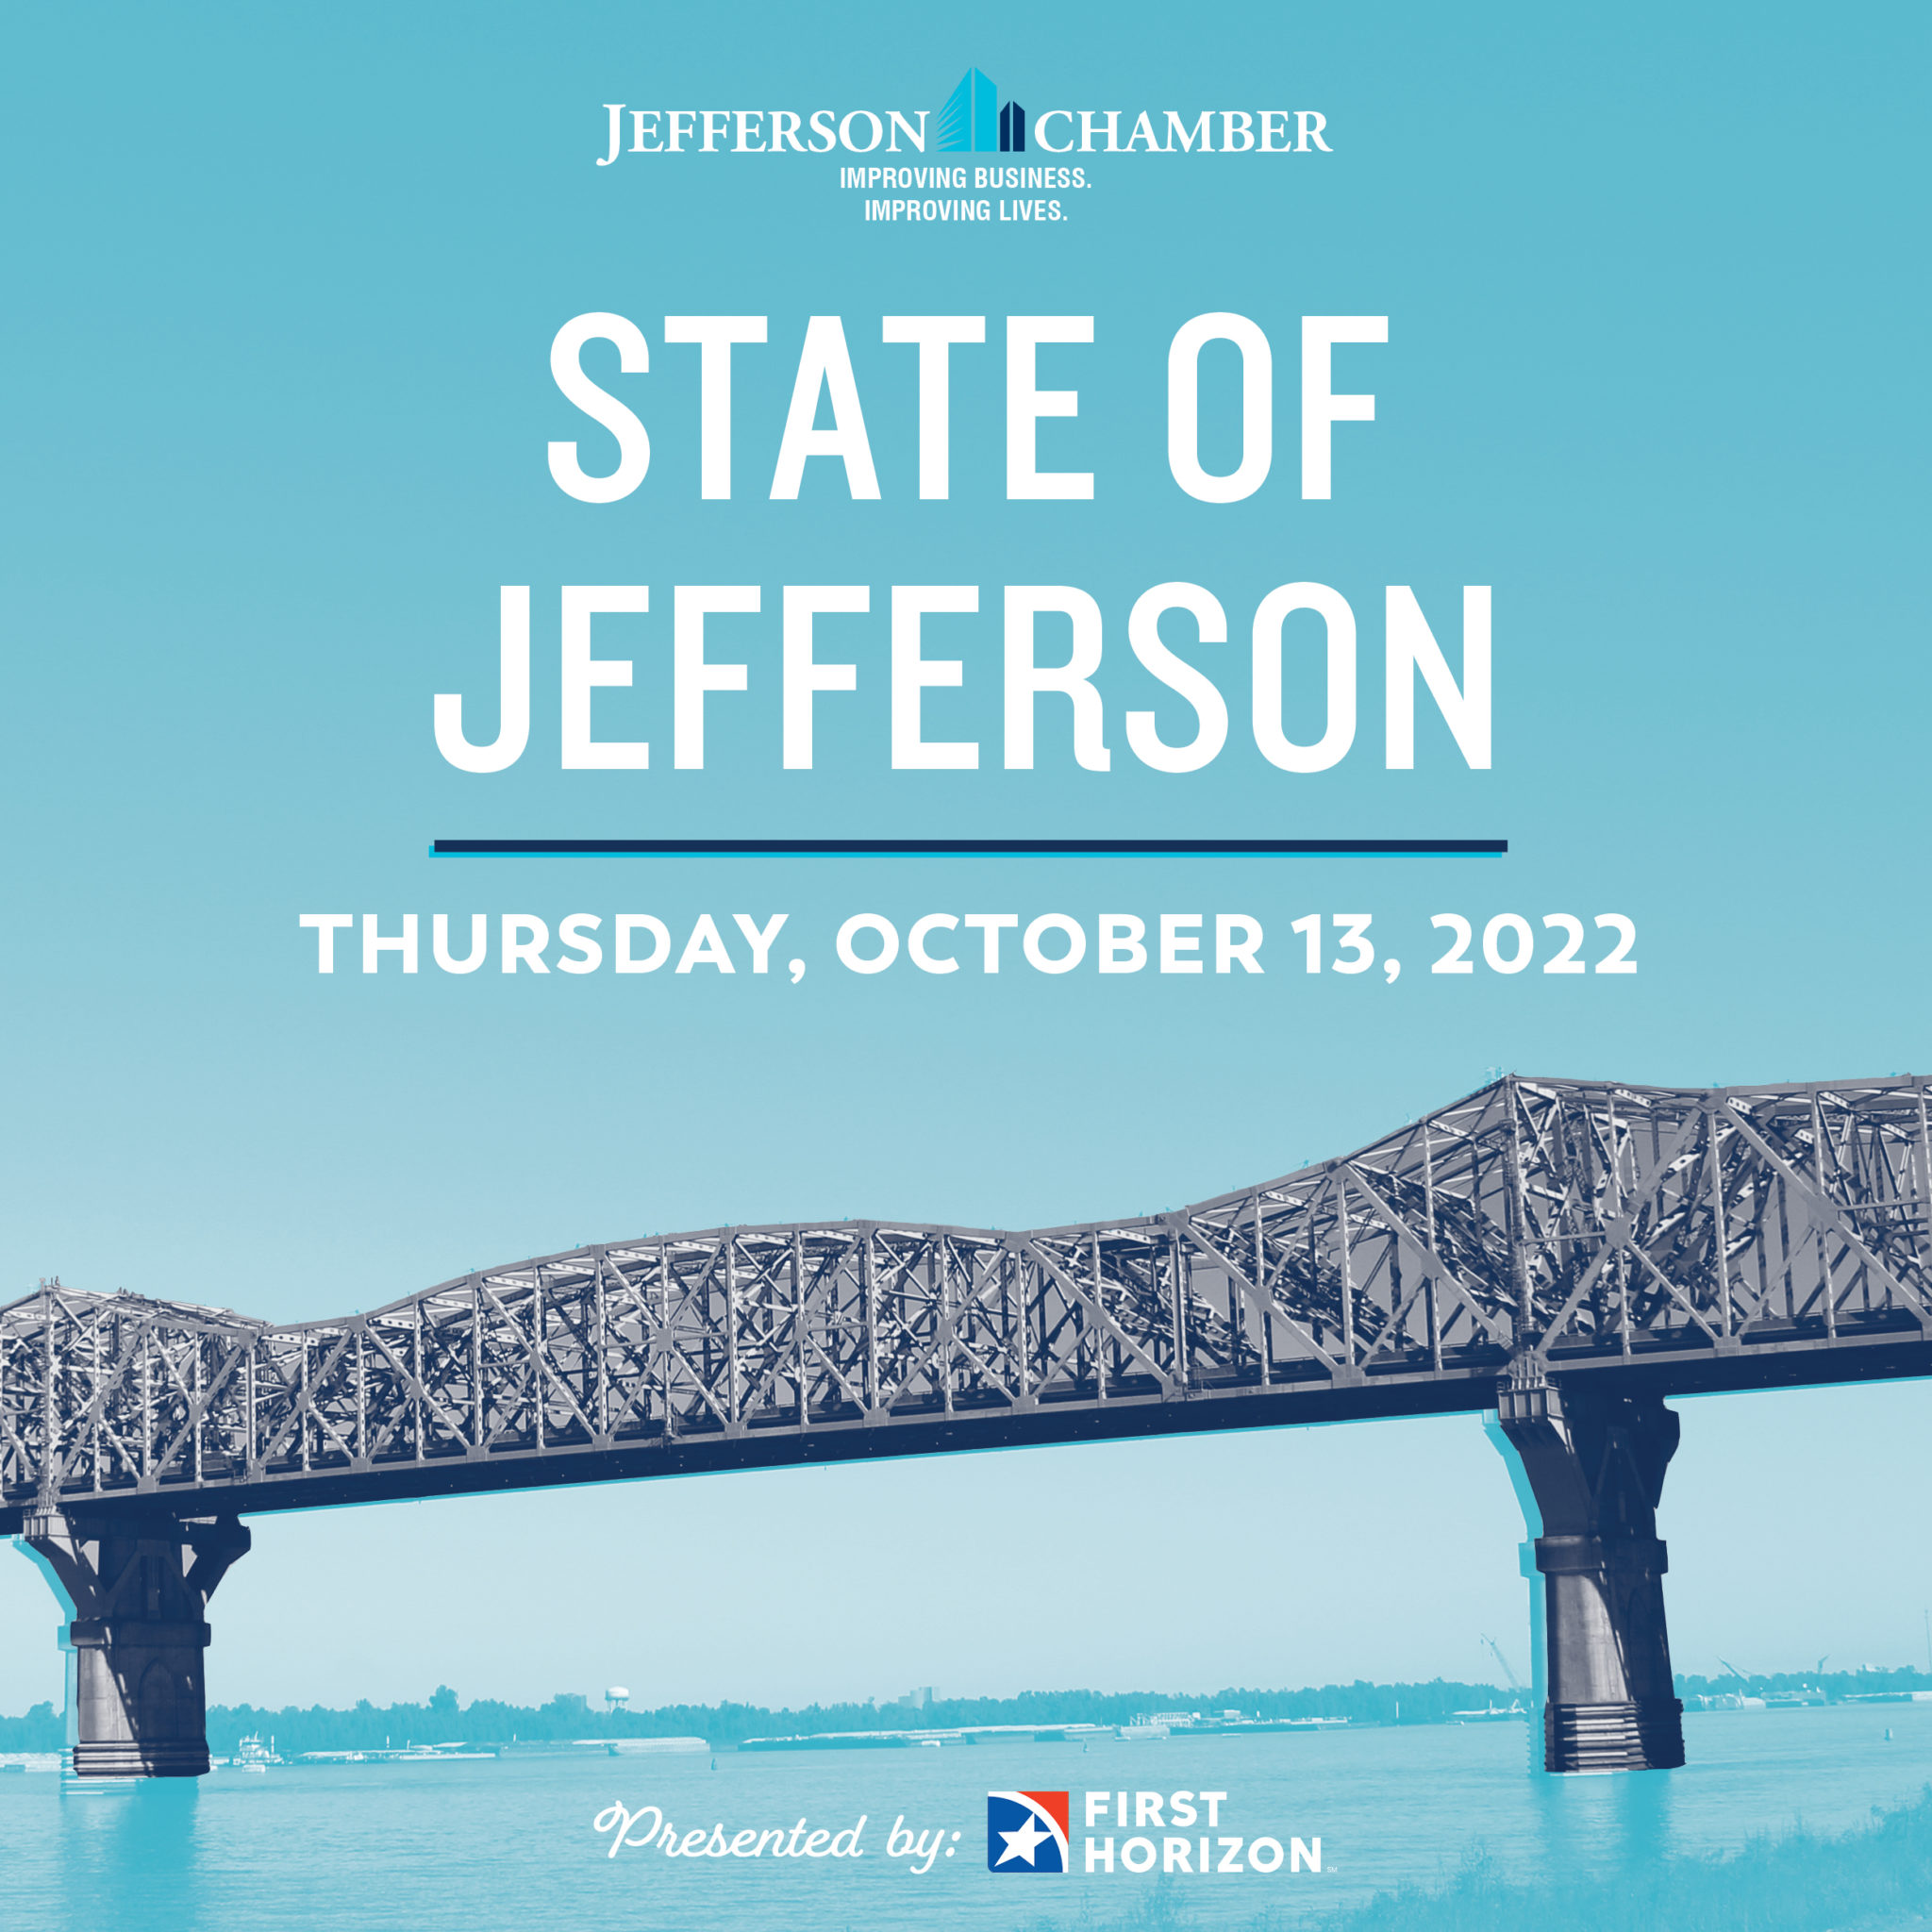 Jefferson Chamber of Commerce Improving Business, Improving Lives